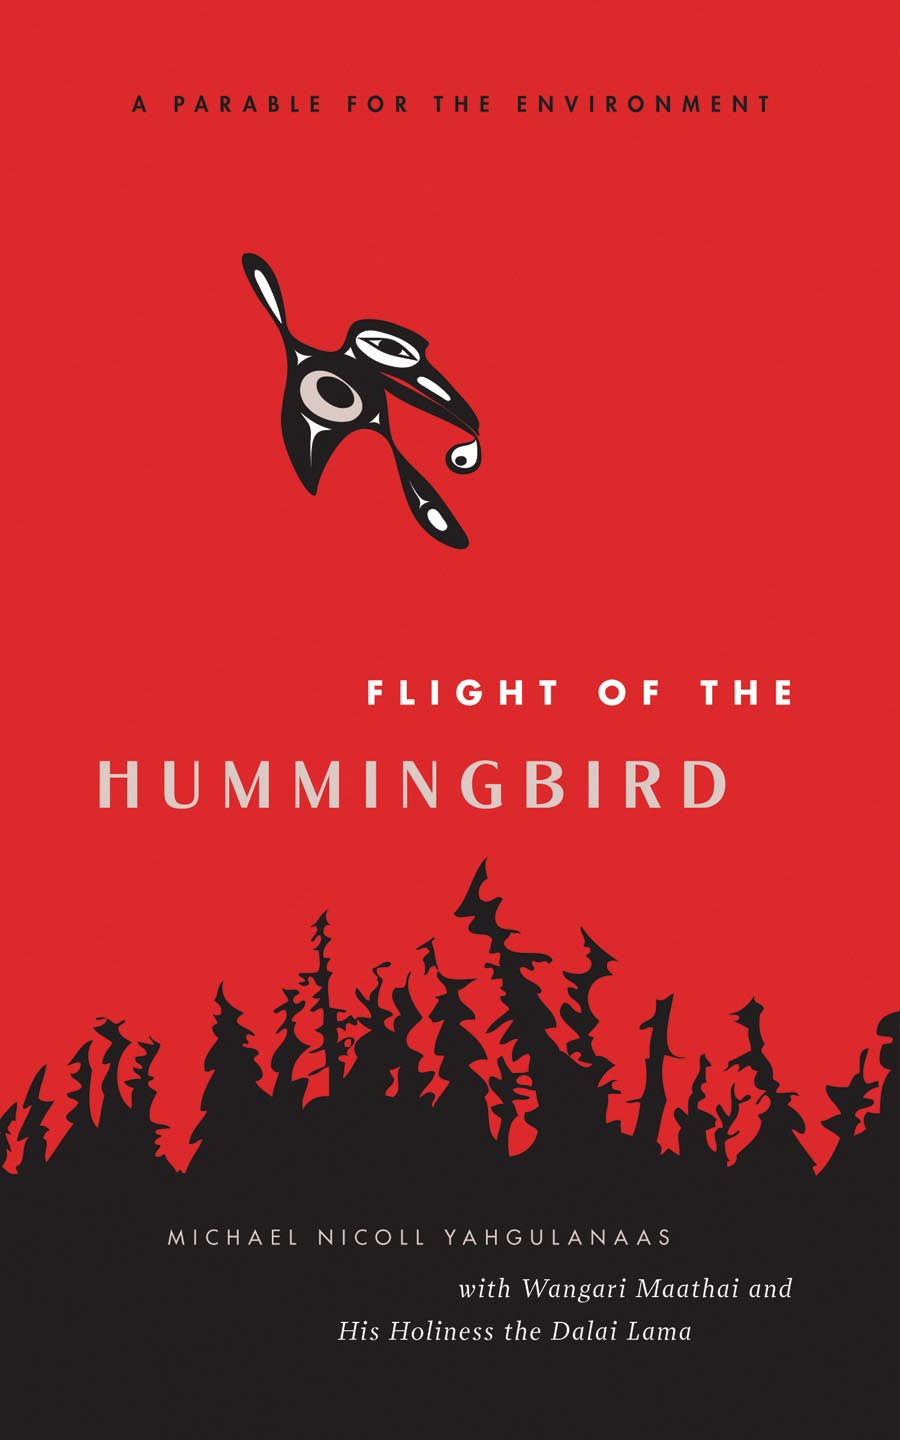 FLIGHT OF THE HUMMINGBIRD BY MICHAEL YAHGULANAAS - HERITAGE GROUP